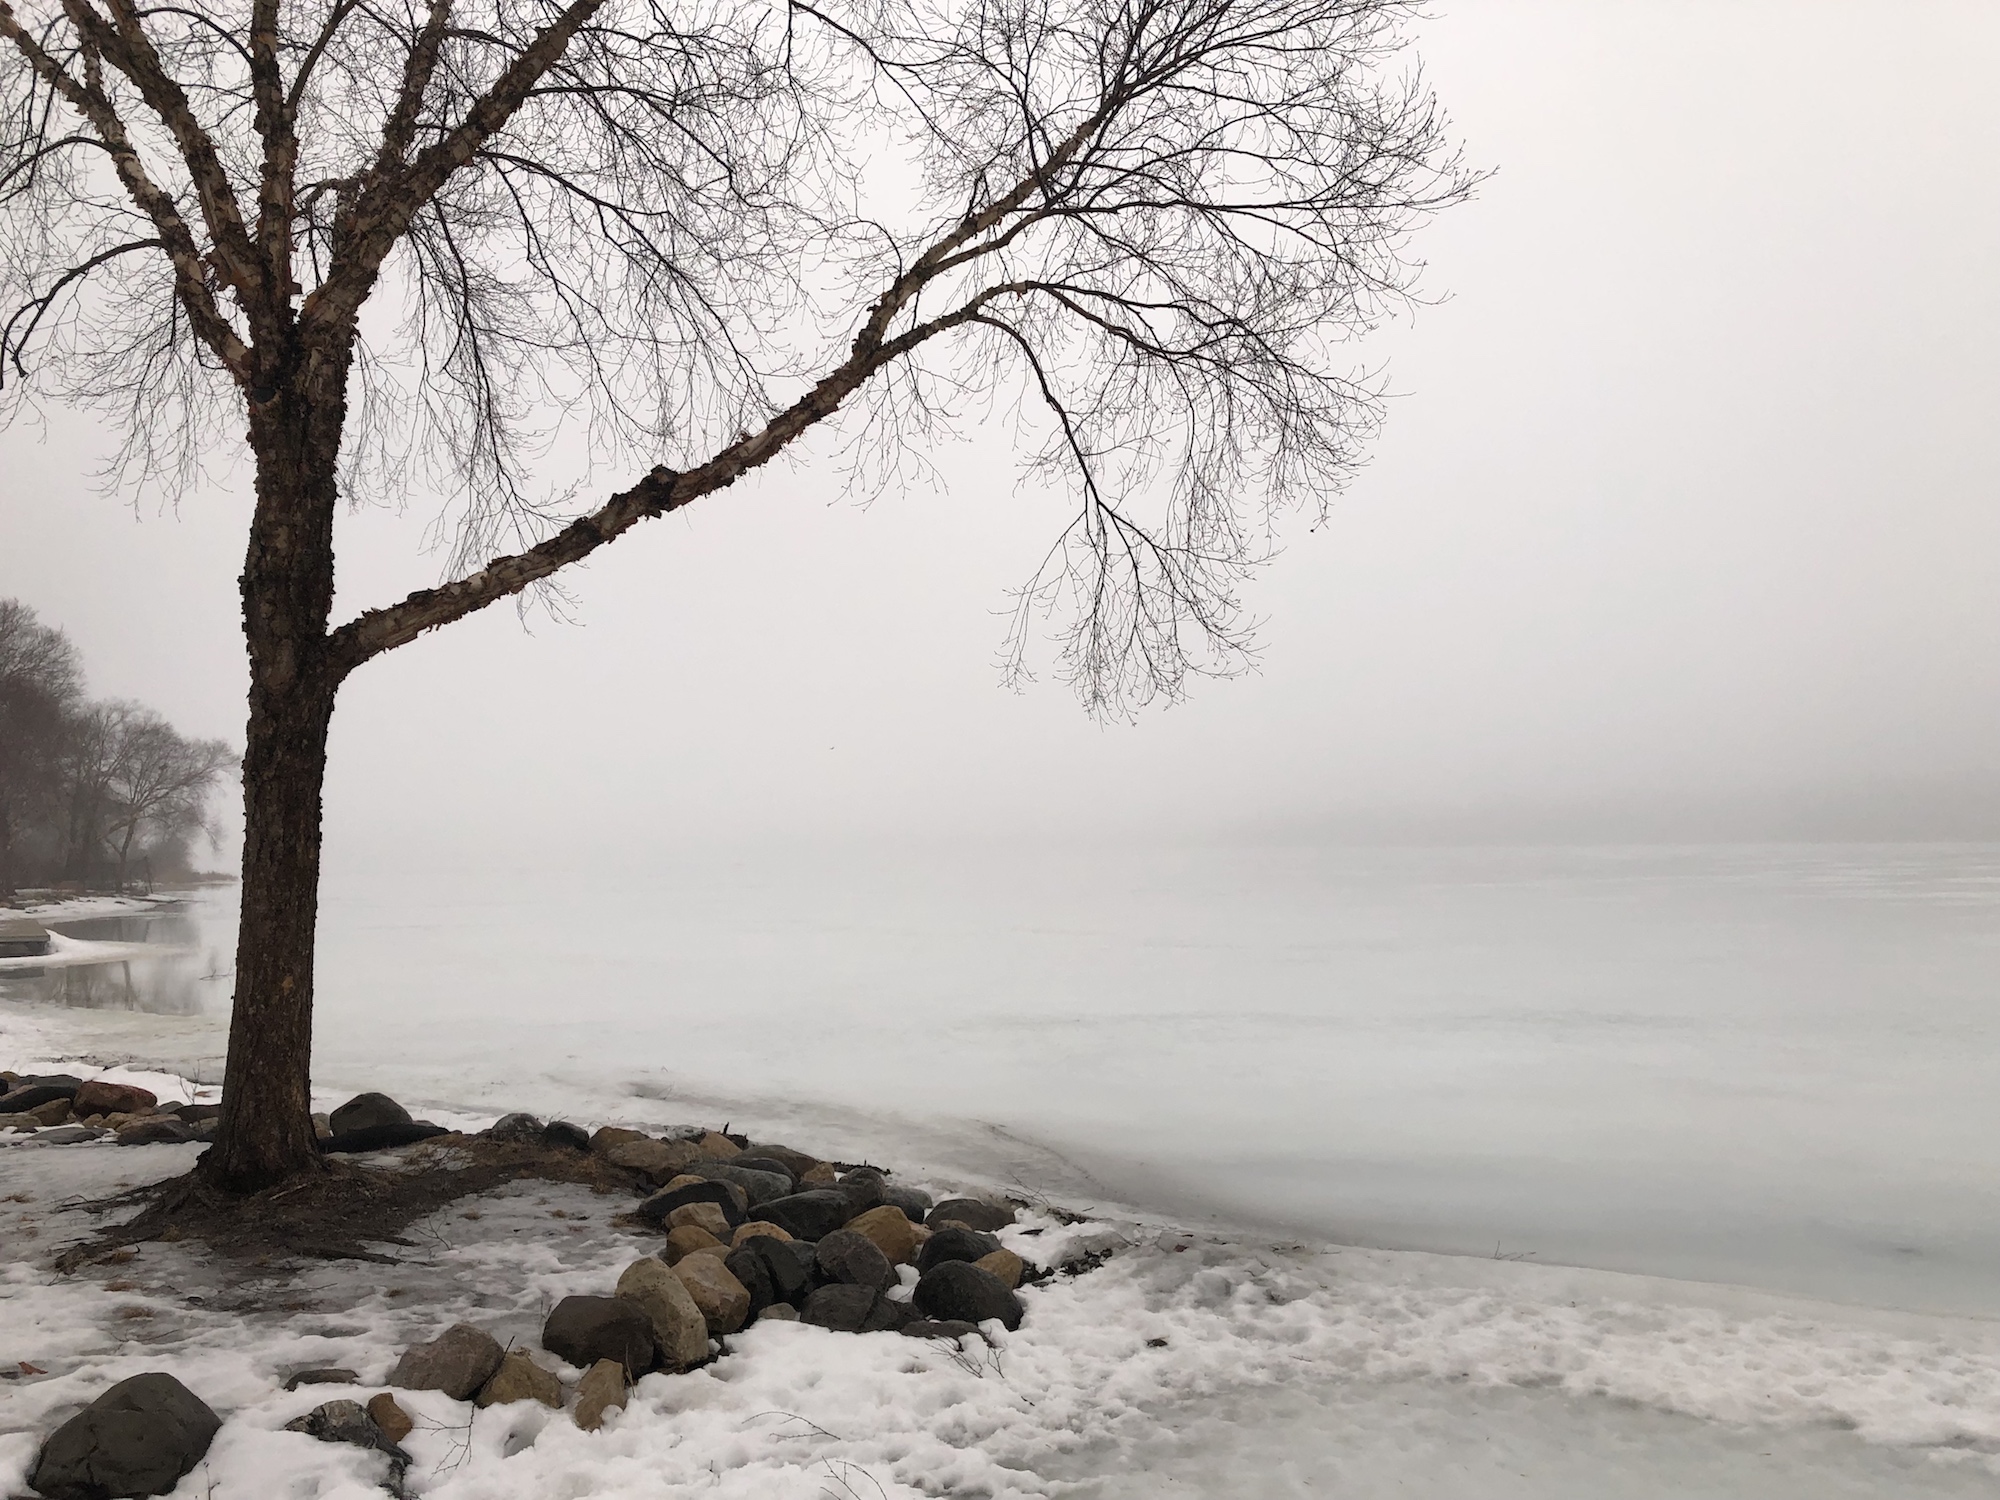 Lake Wingra on March 13, 2019.